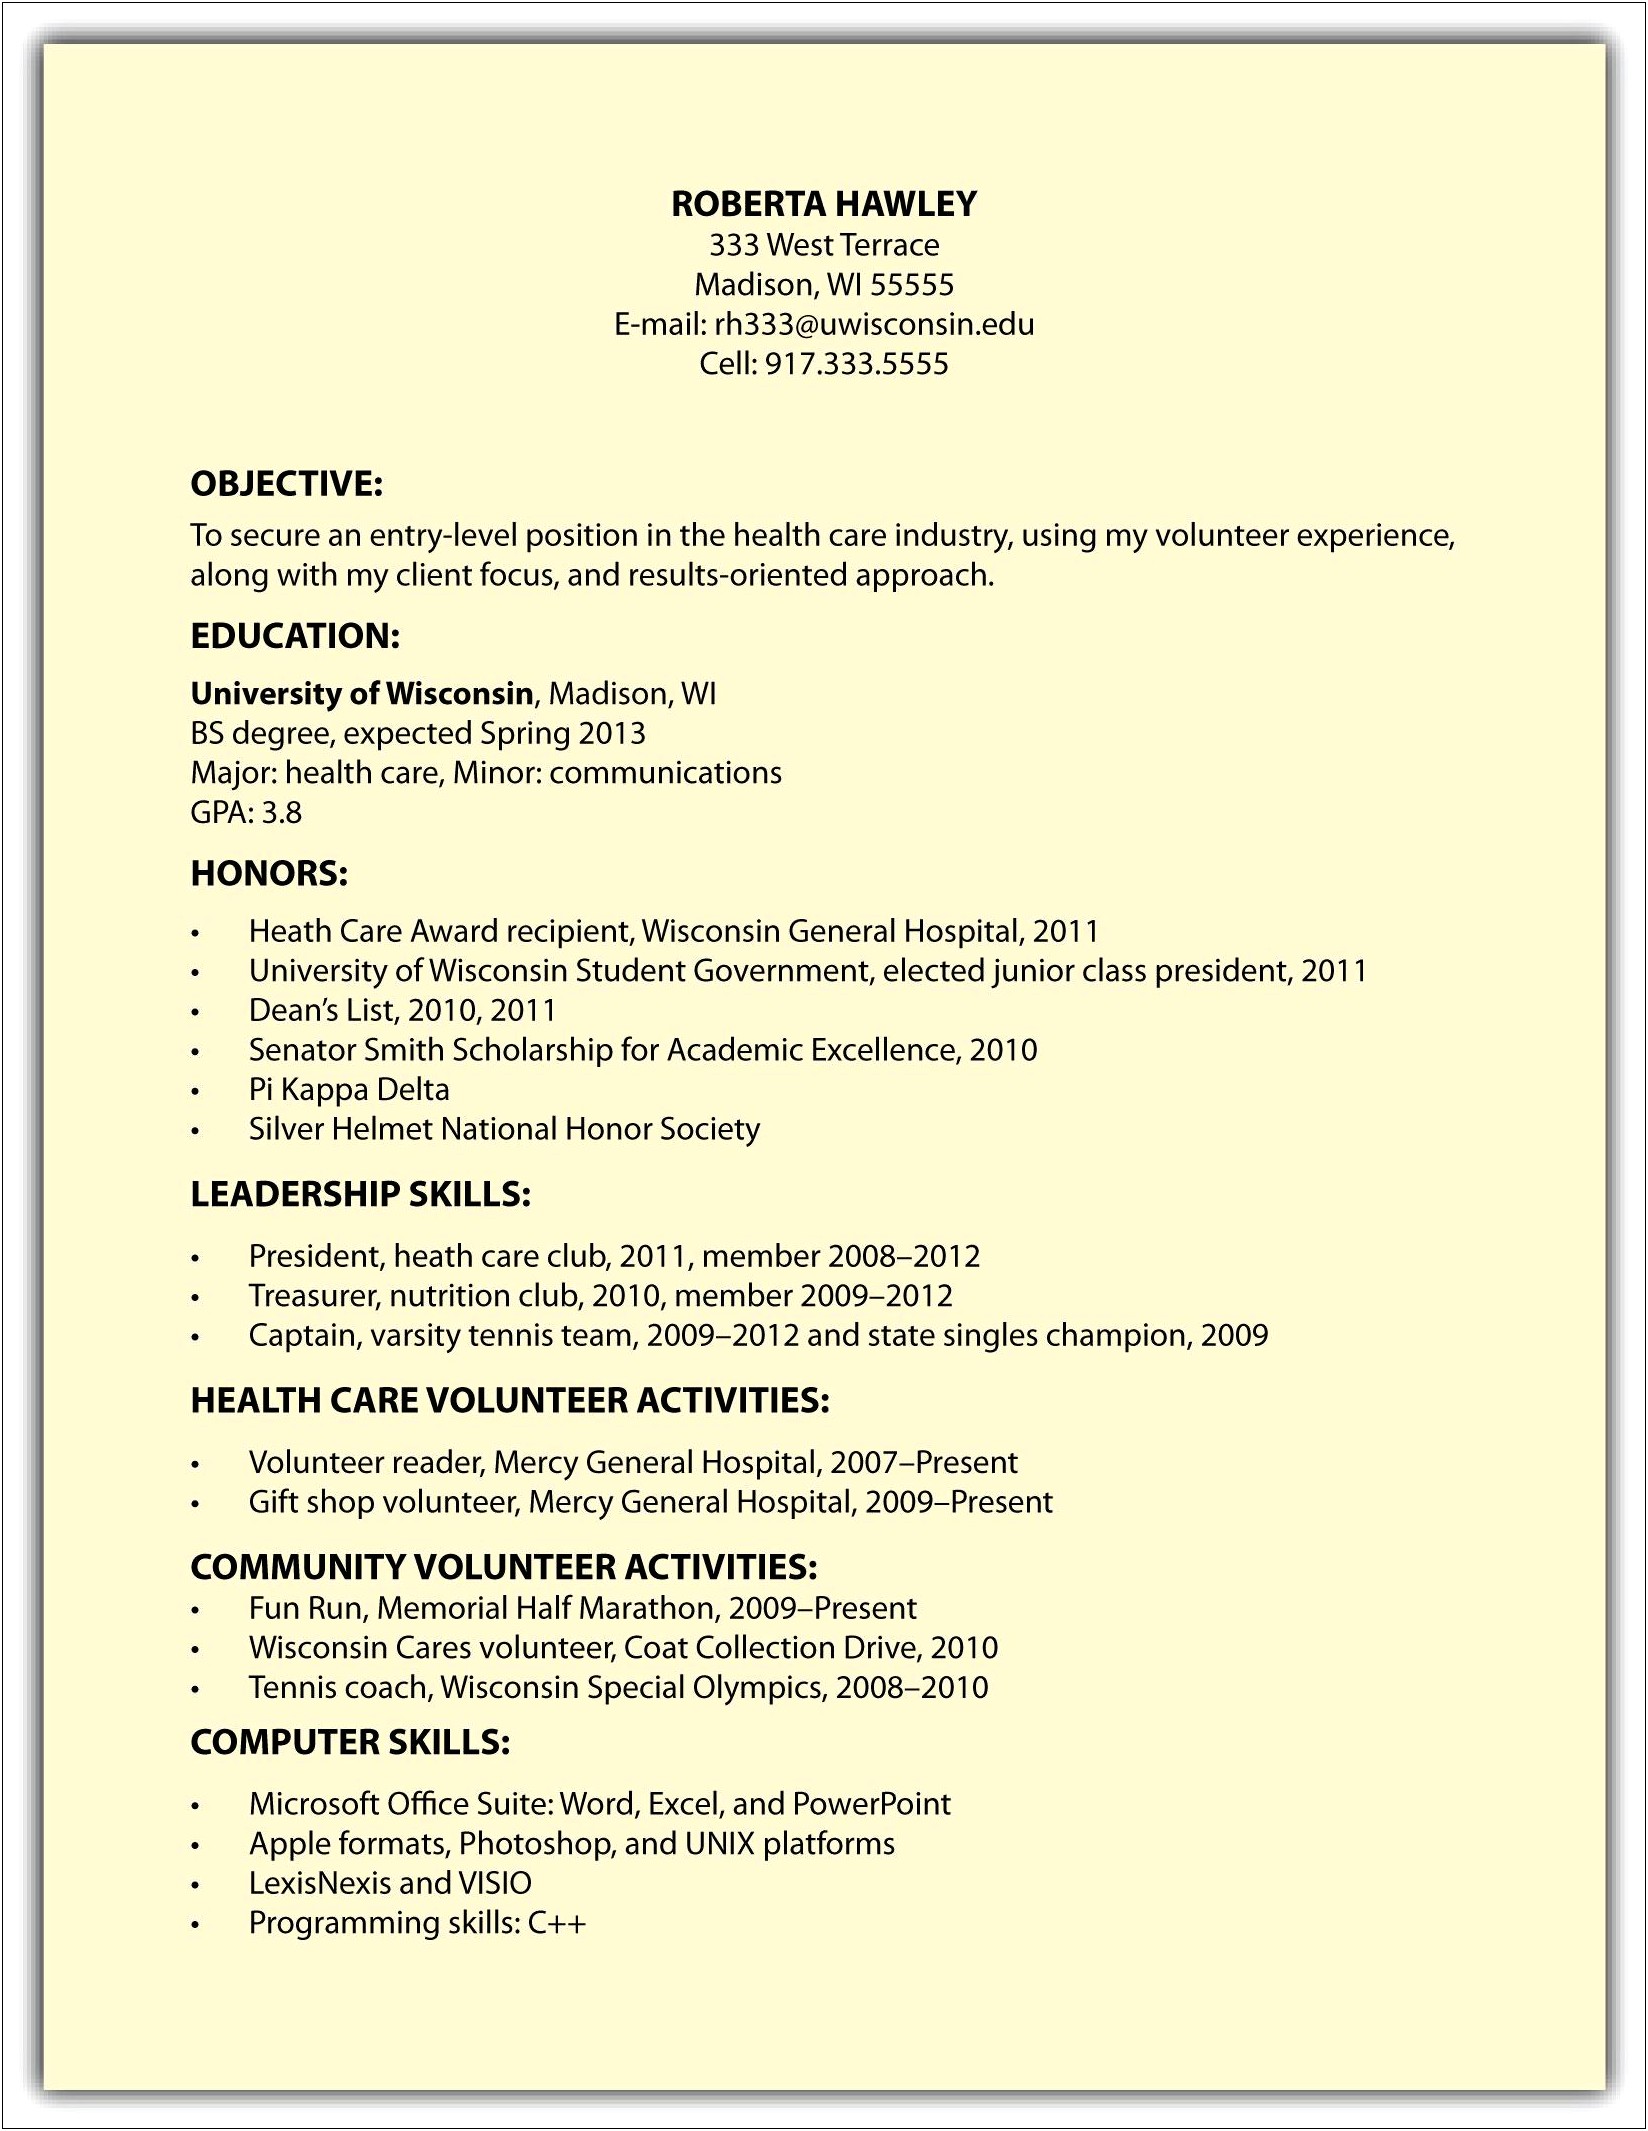 Resume Objective For Hospital Jobs